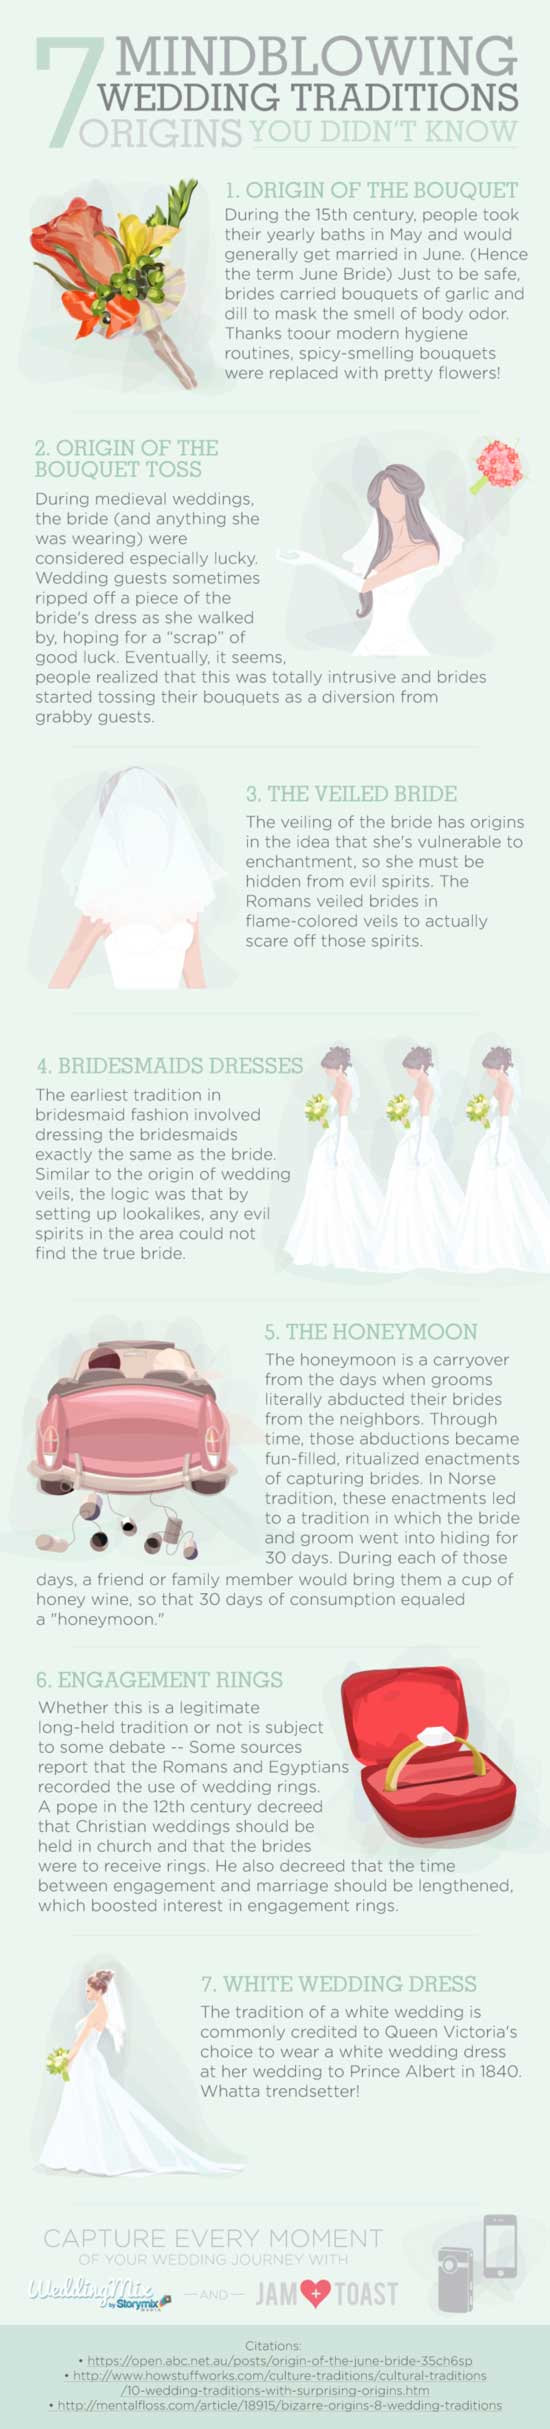 wedding tradition origins infographic